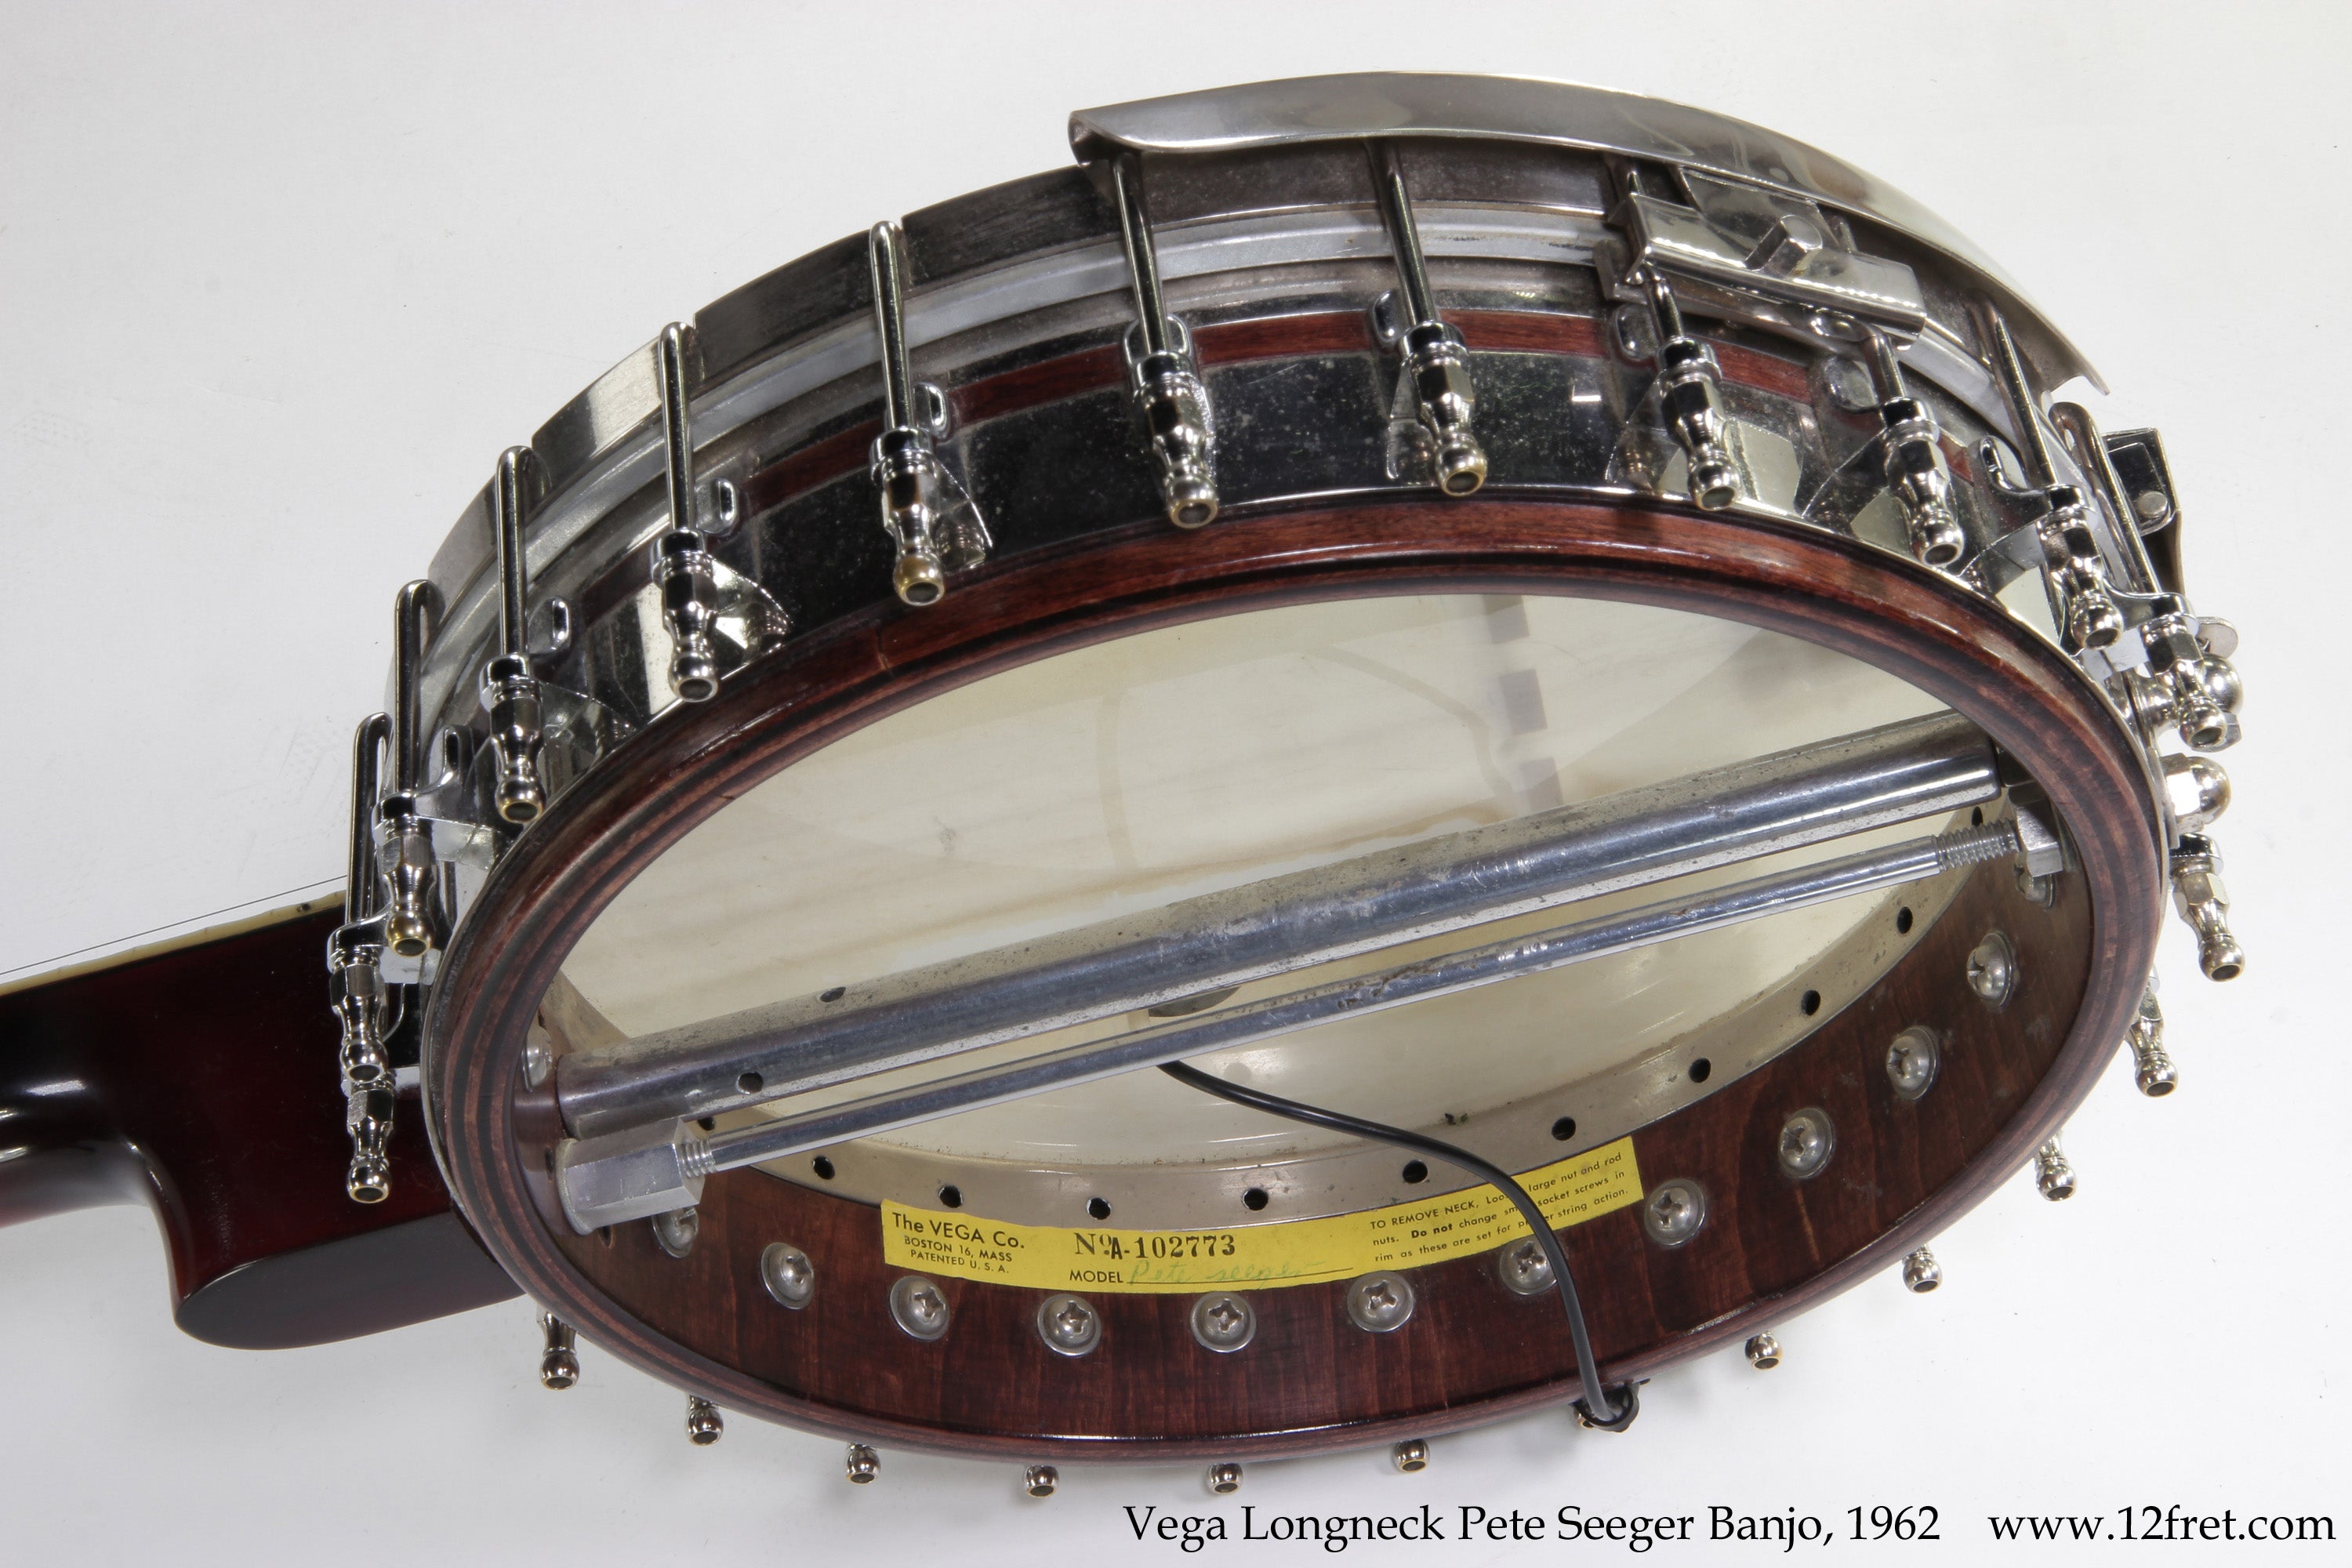 Vega Longneck Pete Seeger Banjo, 1962 - The Twelfth Fret